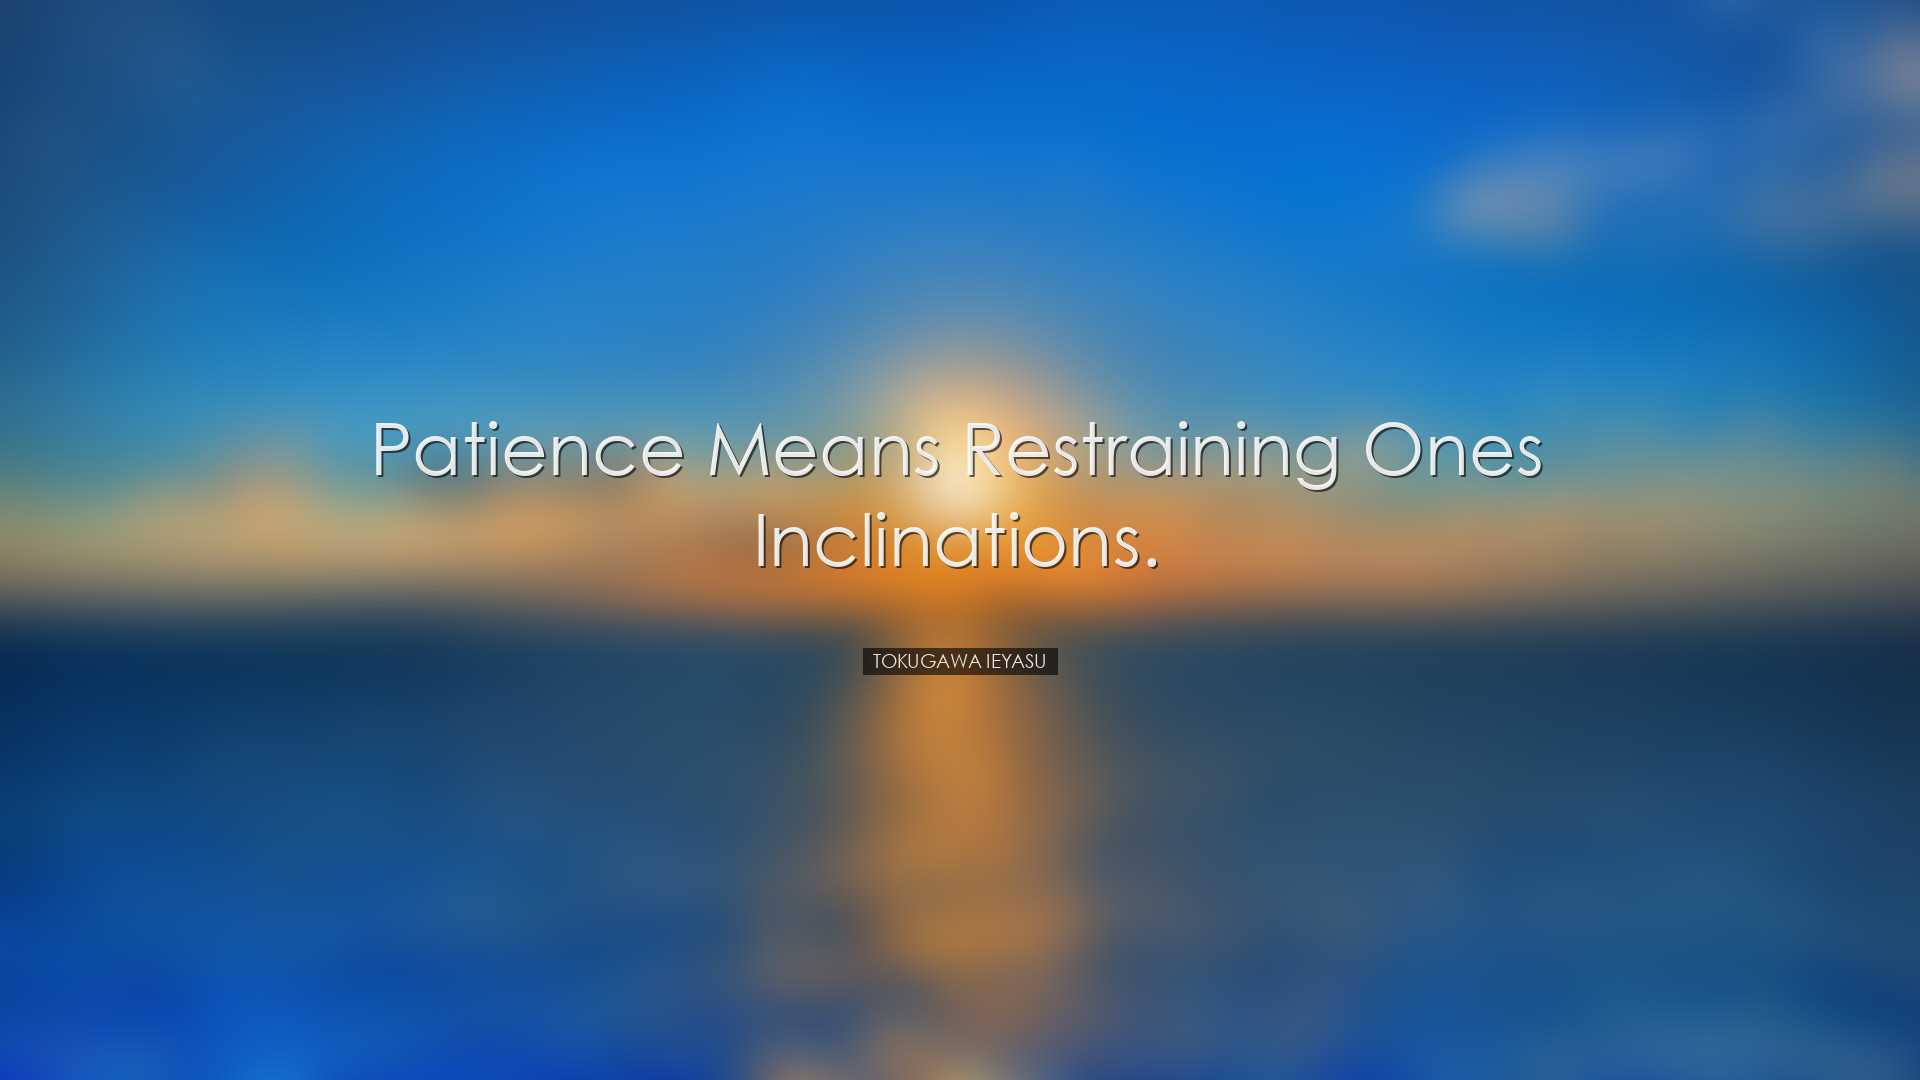 Patience means restraining ones inclinations. - Tokugawa Ieyasu